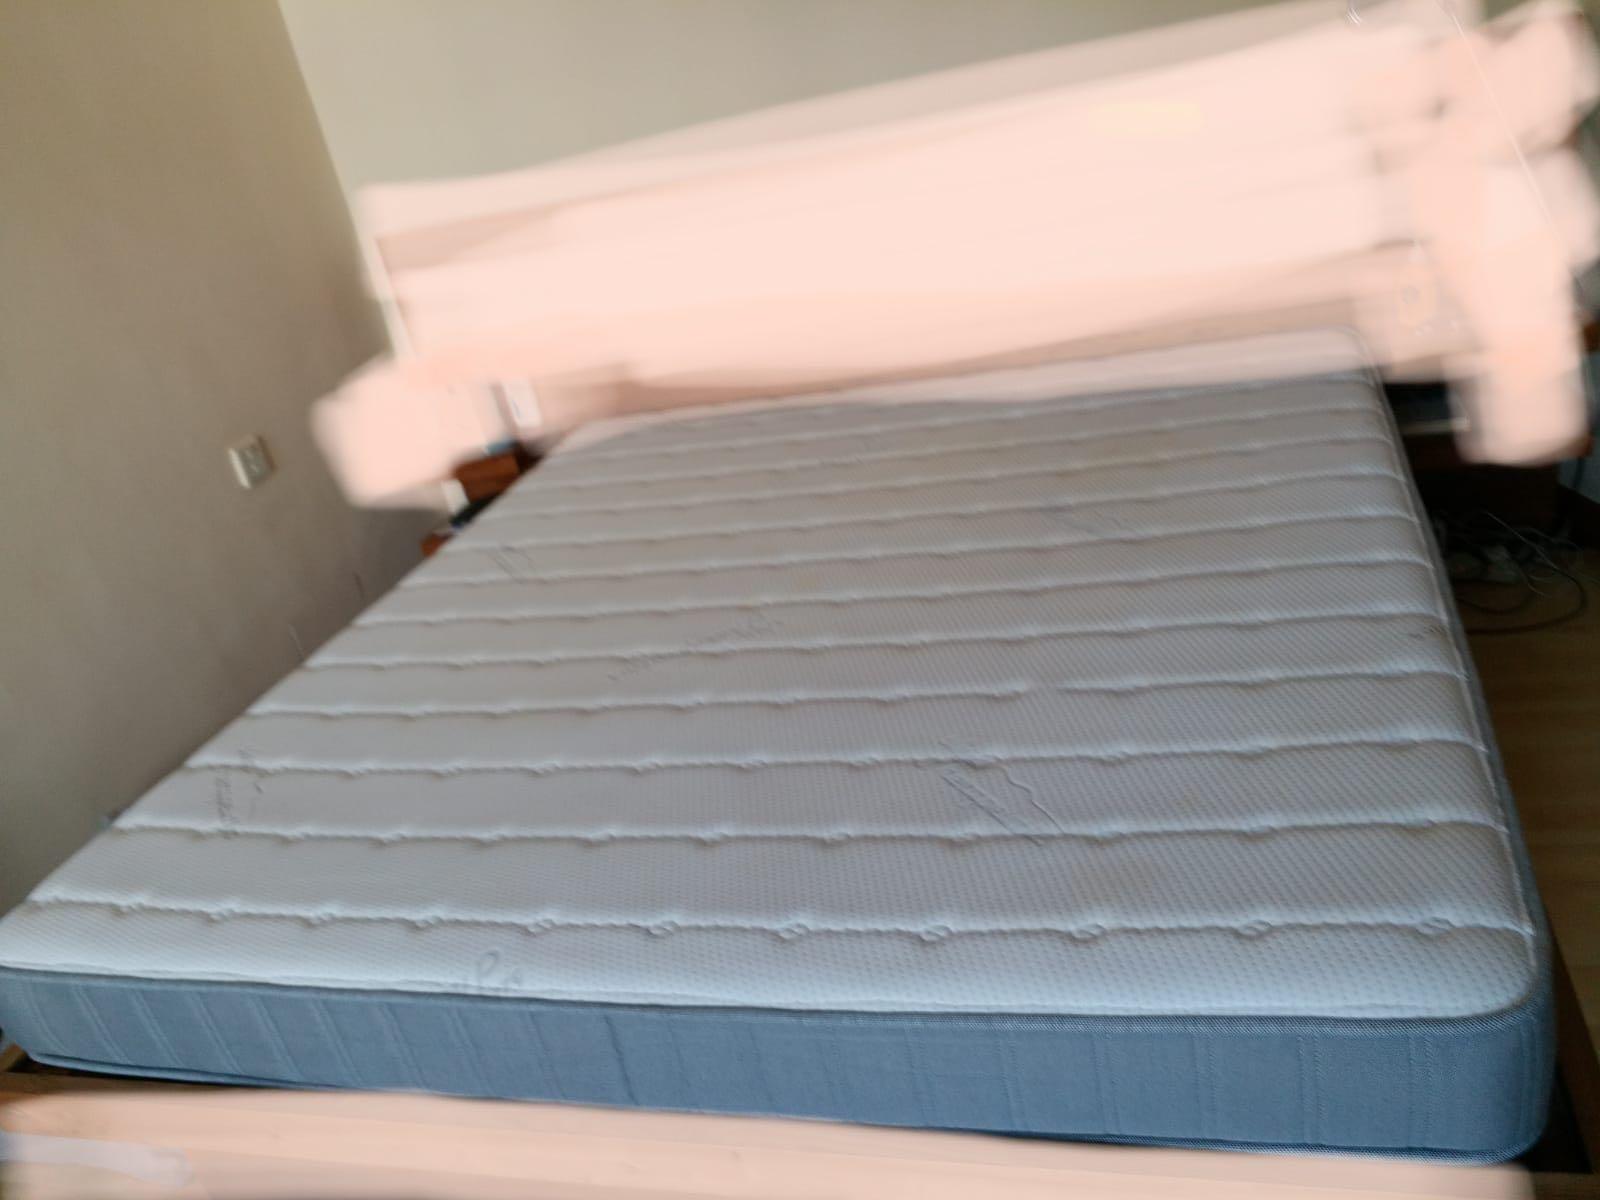 snuggletime healthtex mattress